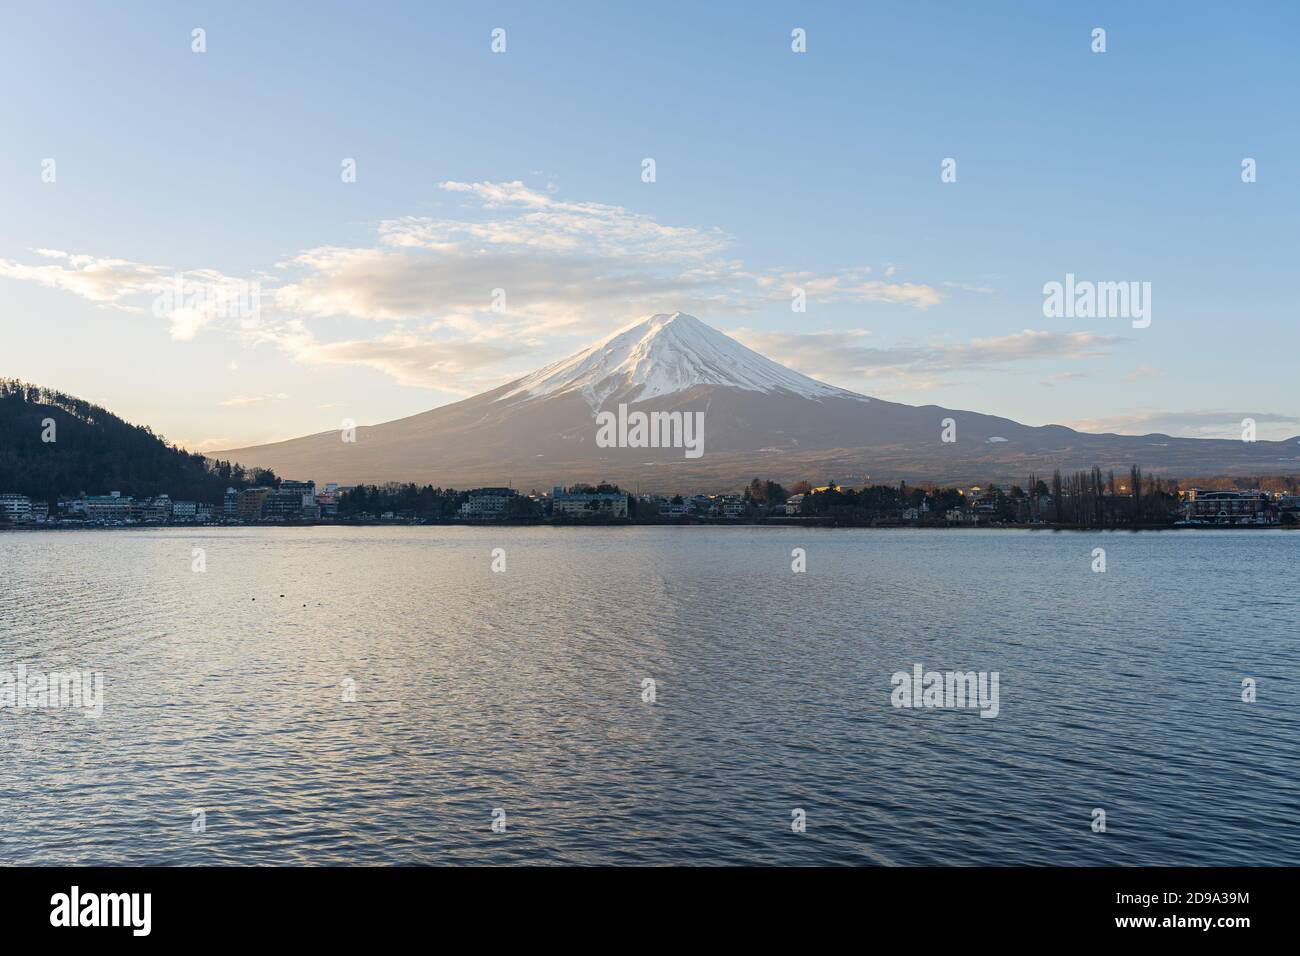 Fujisan Mountain with lake in Kawaguchiko, Japan. Stock Photo